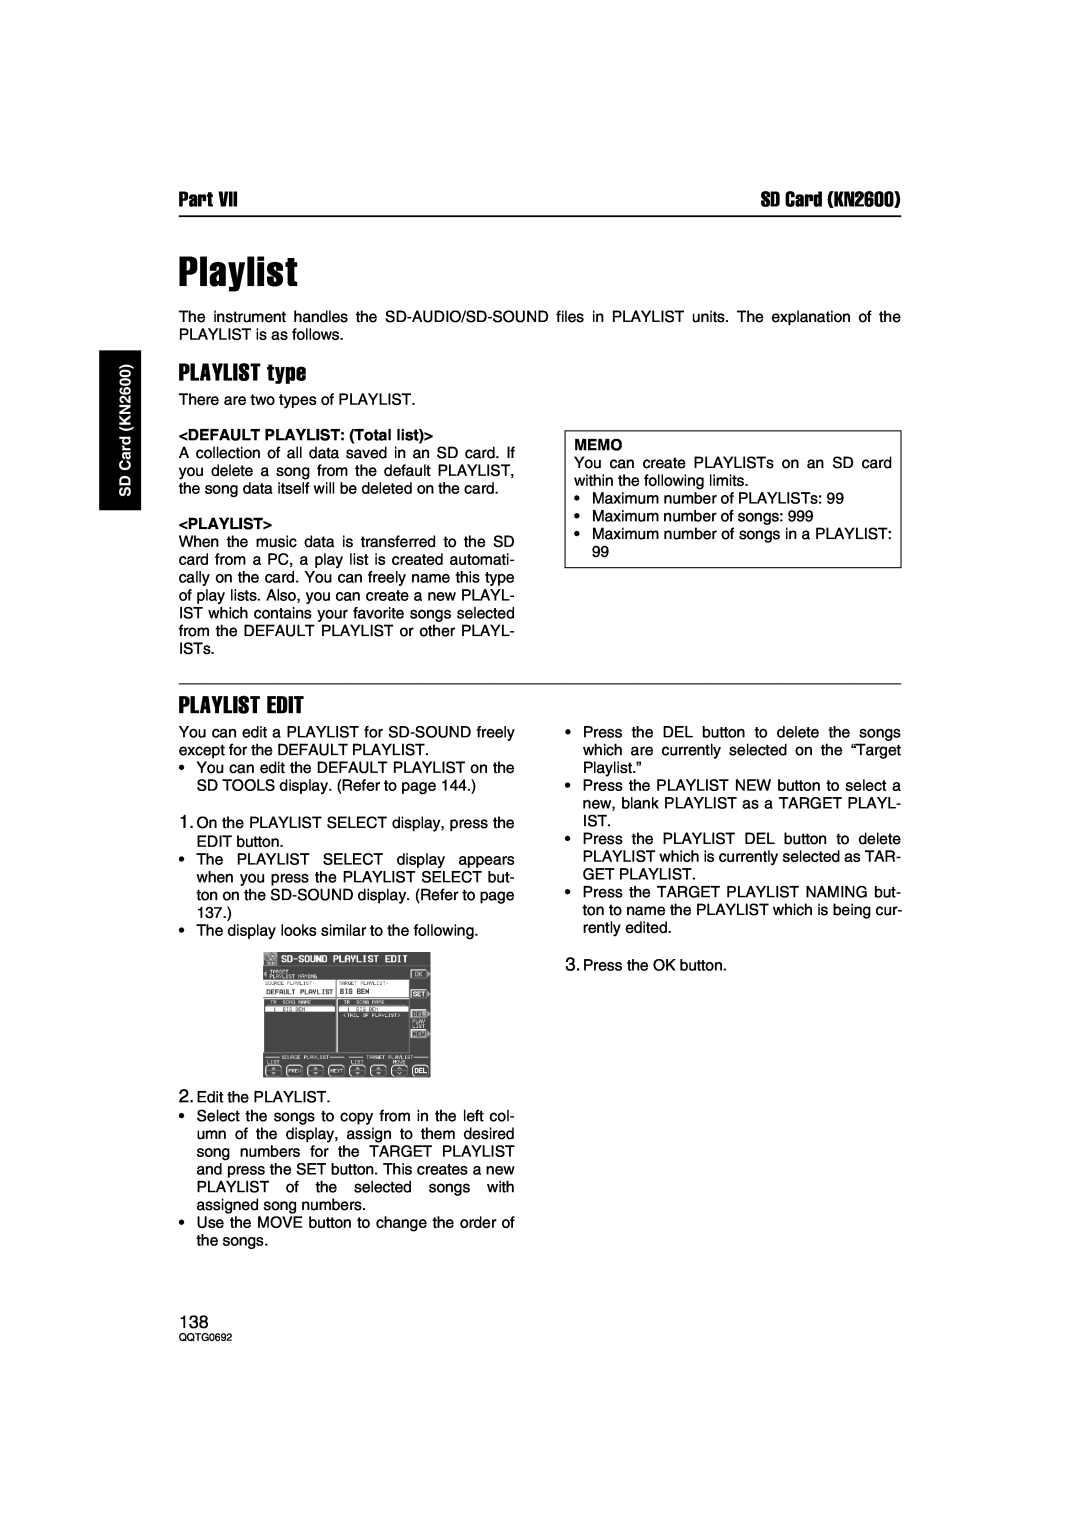 Panasonic SX-KN2600, SX-KN2400 PLAYLIST type, Playlist Edit, DEFAULT PLAYLIST Total list, Memo, Part, SD Card KN2600 